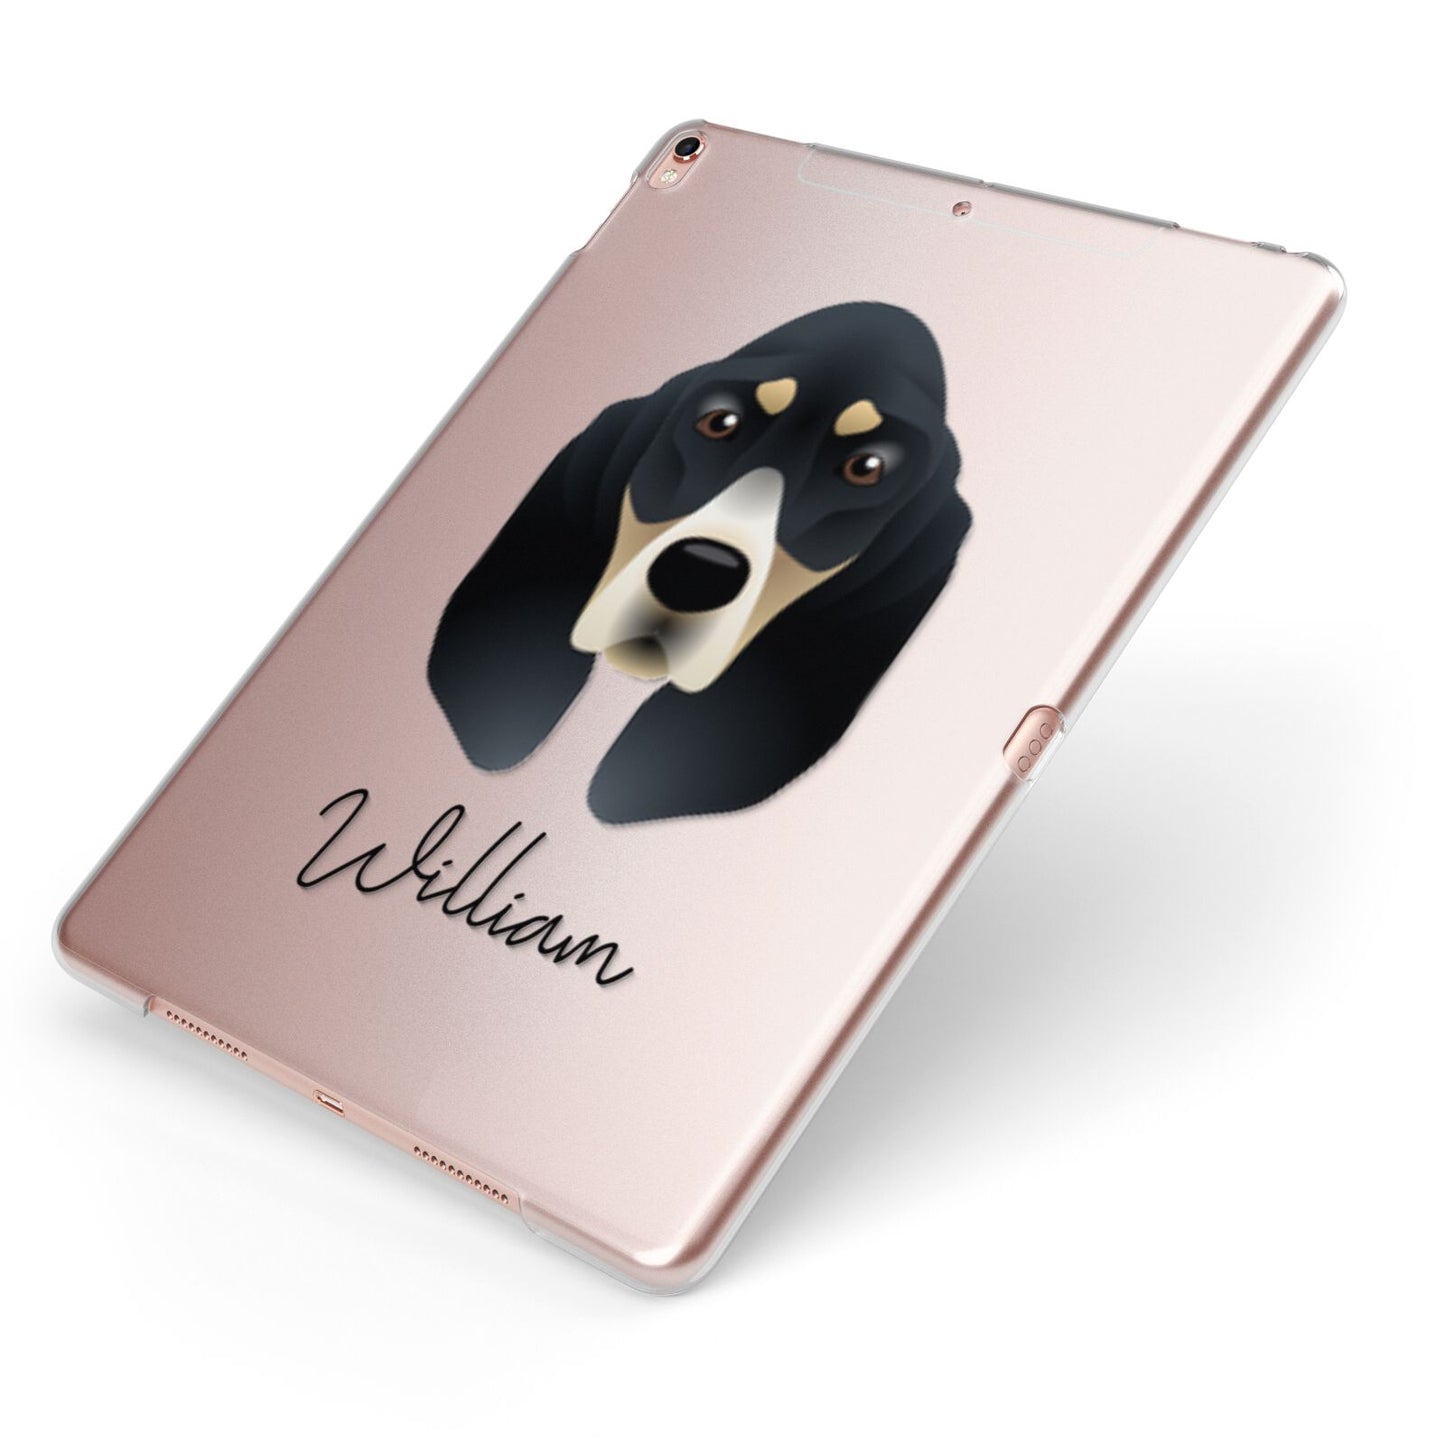 Basset Bleu De Gascogne Personalised Apple iPad Case on Rose Gold iPad Side View